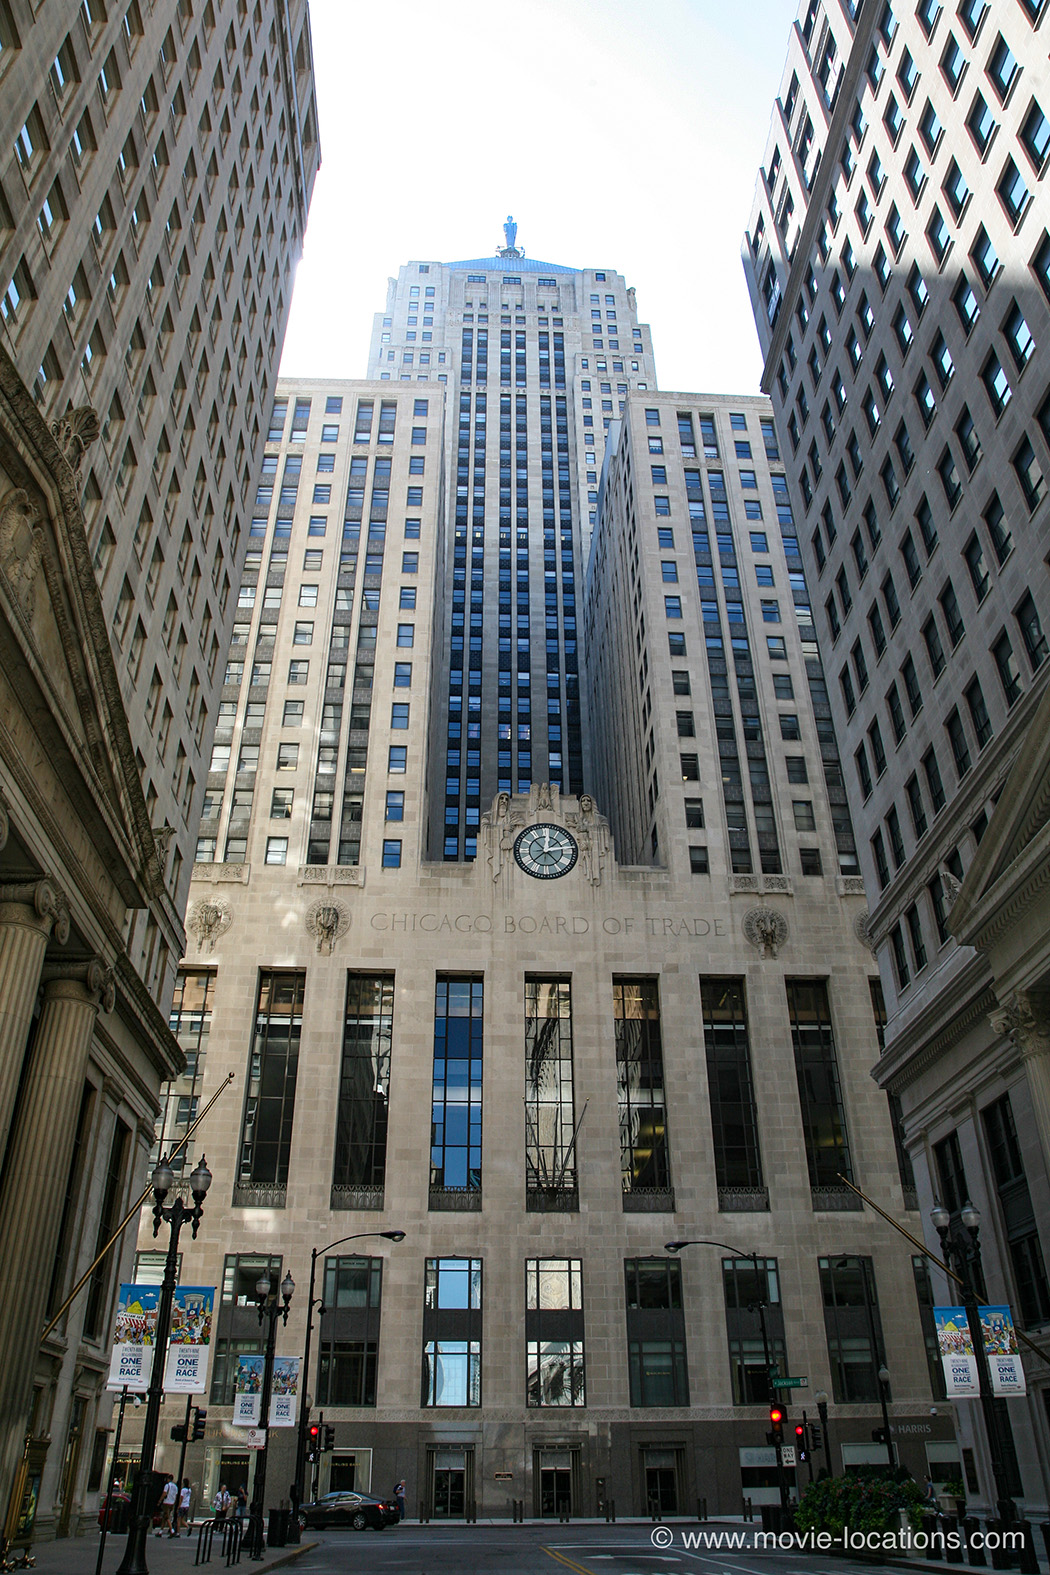 Batman Begins location: Chicago Board of Trade Building, 141 West Jackson Boulevard, Chicago